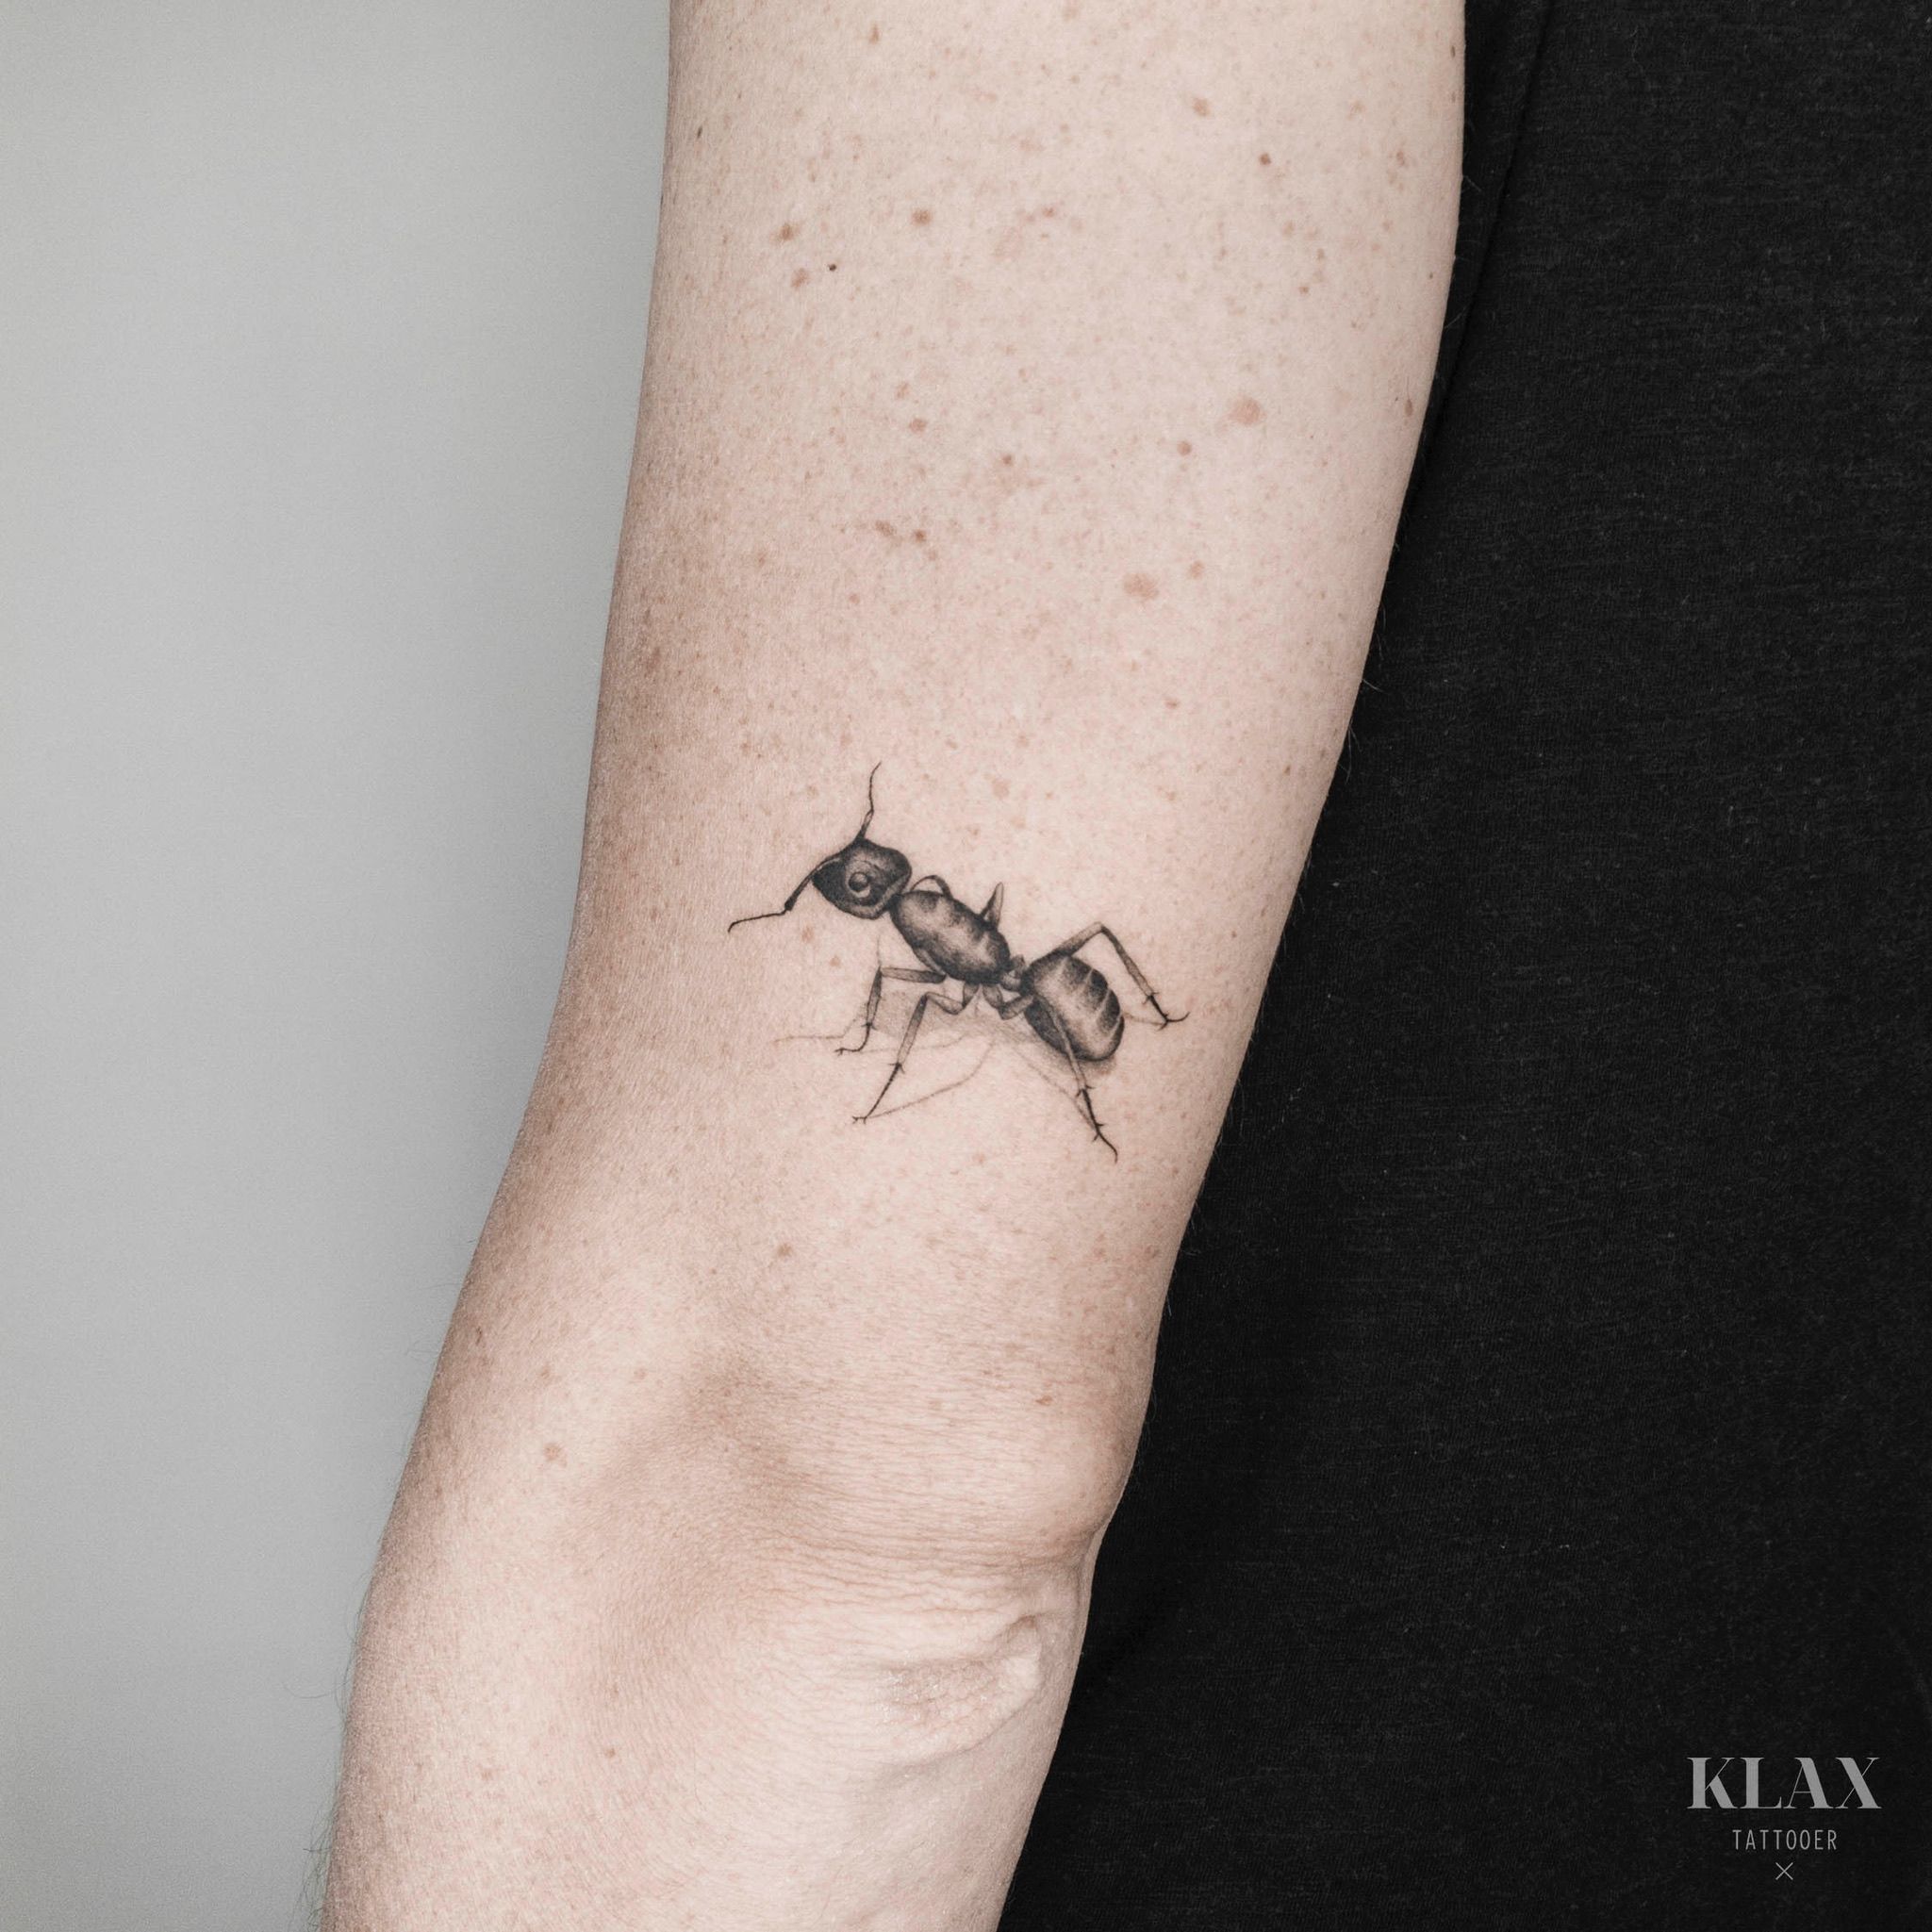 Microrealistic ant tattoo on the wrist